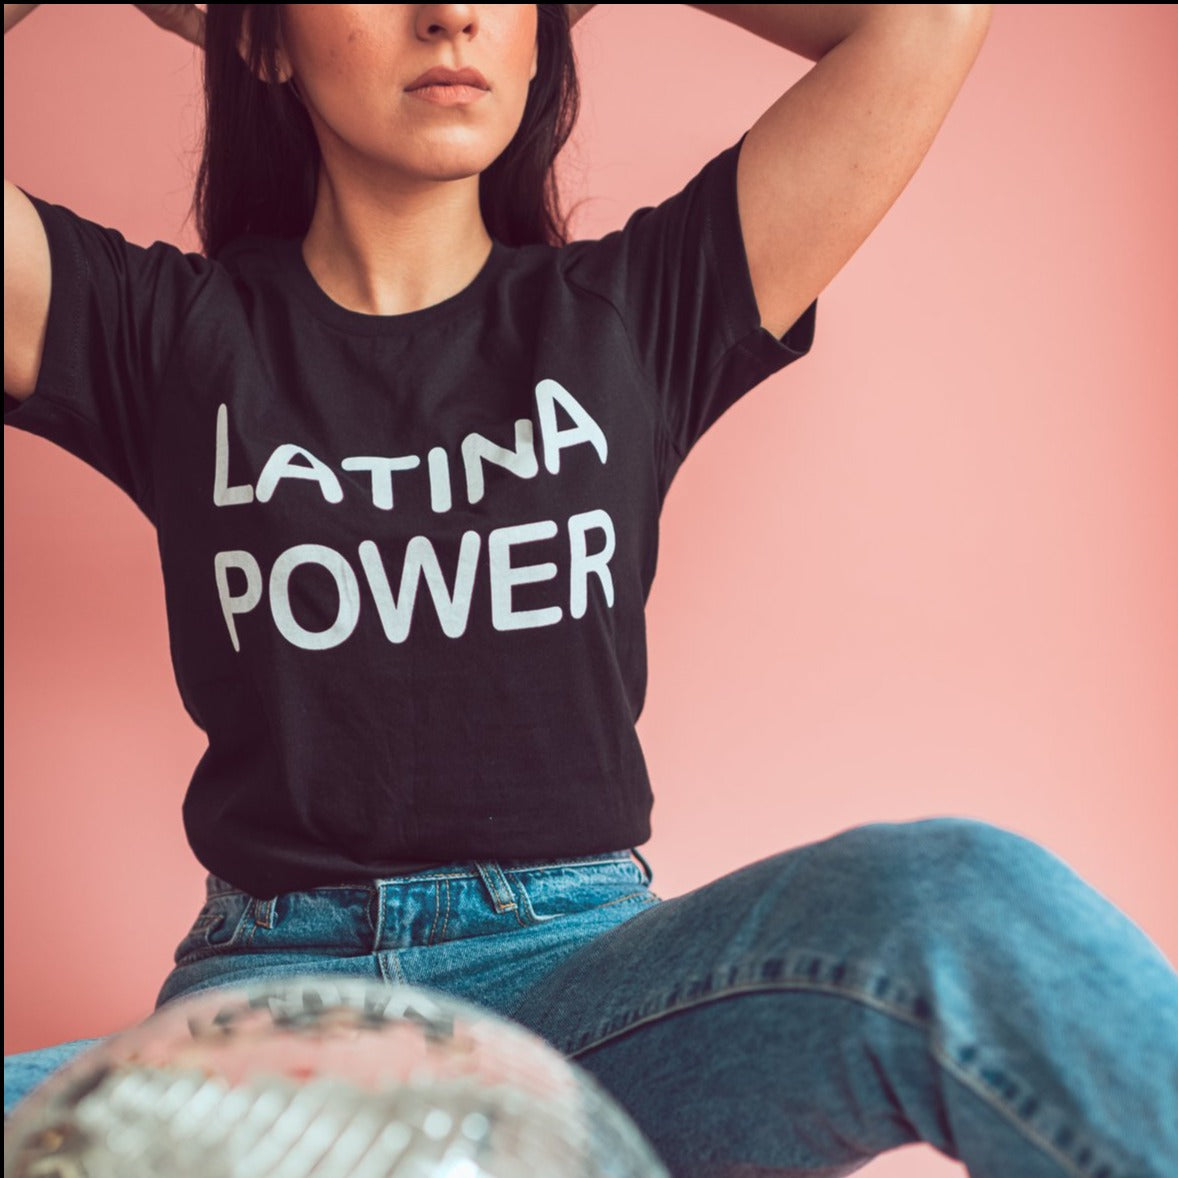 Latina Power Shirt in Black by Jen Zeano Designs